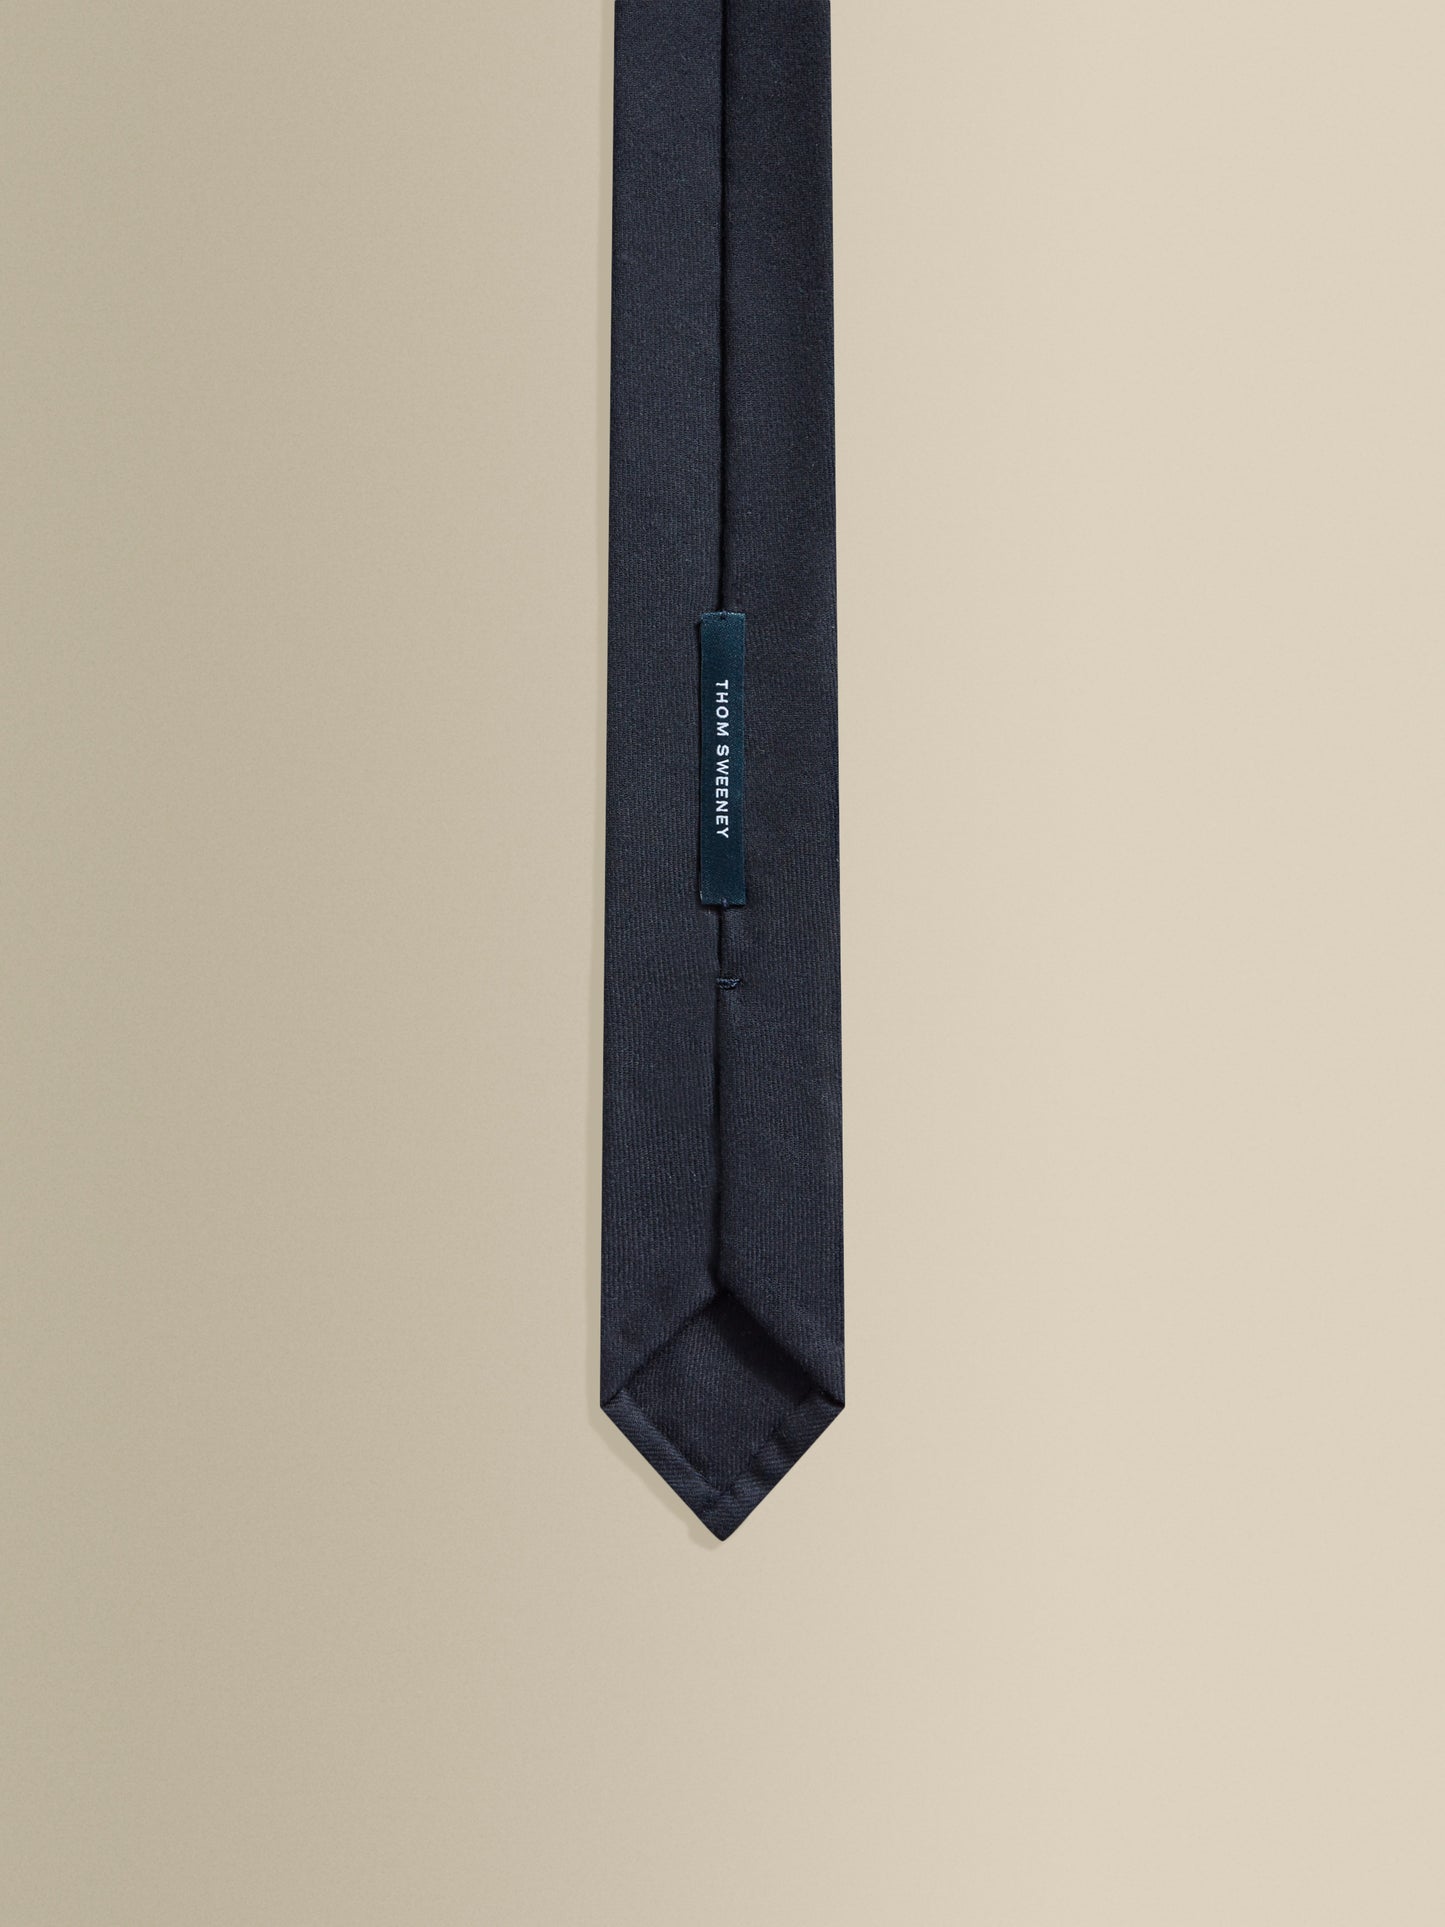 Wool Tie Darkest Navy Inside Label Product Image